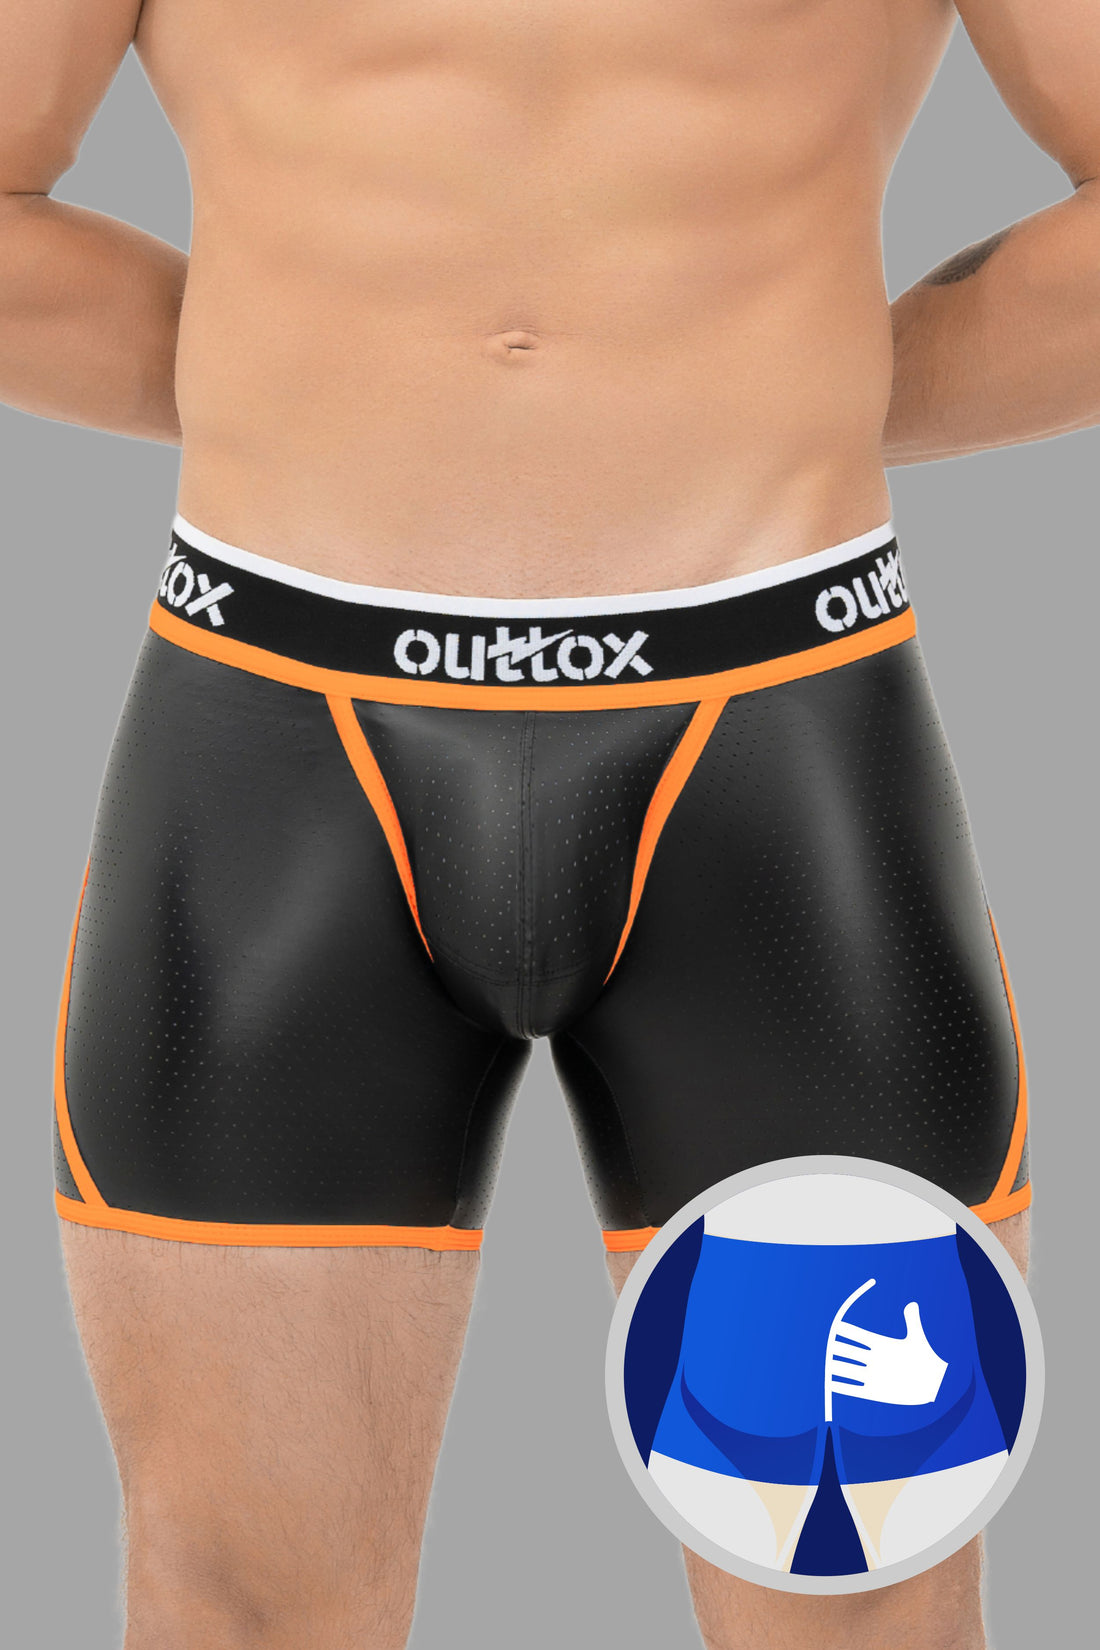 Outtox. Wrap-Rear Short Tights. Snap Codpiece. Black+Orange